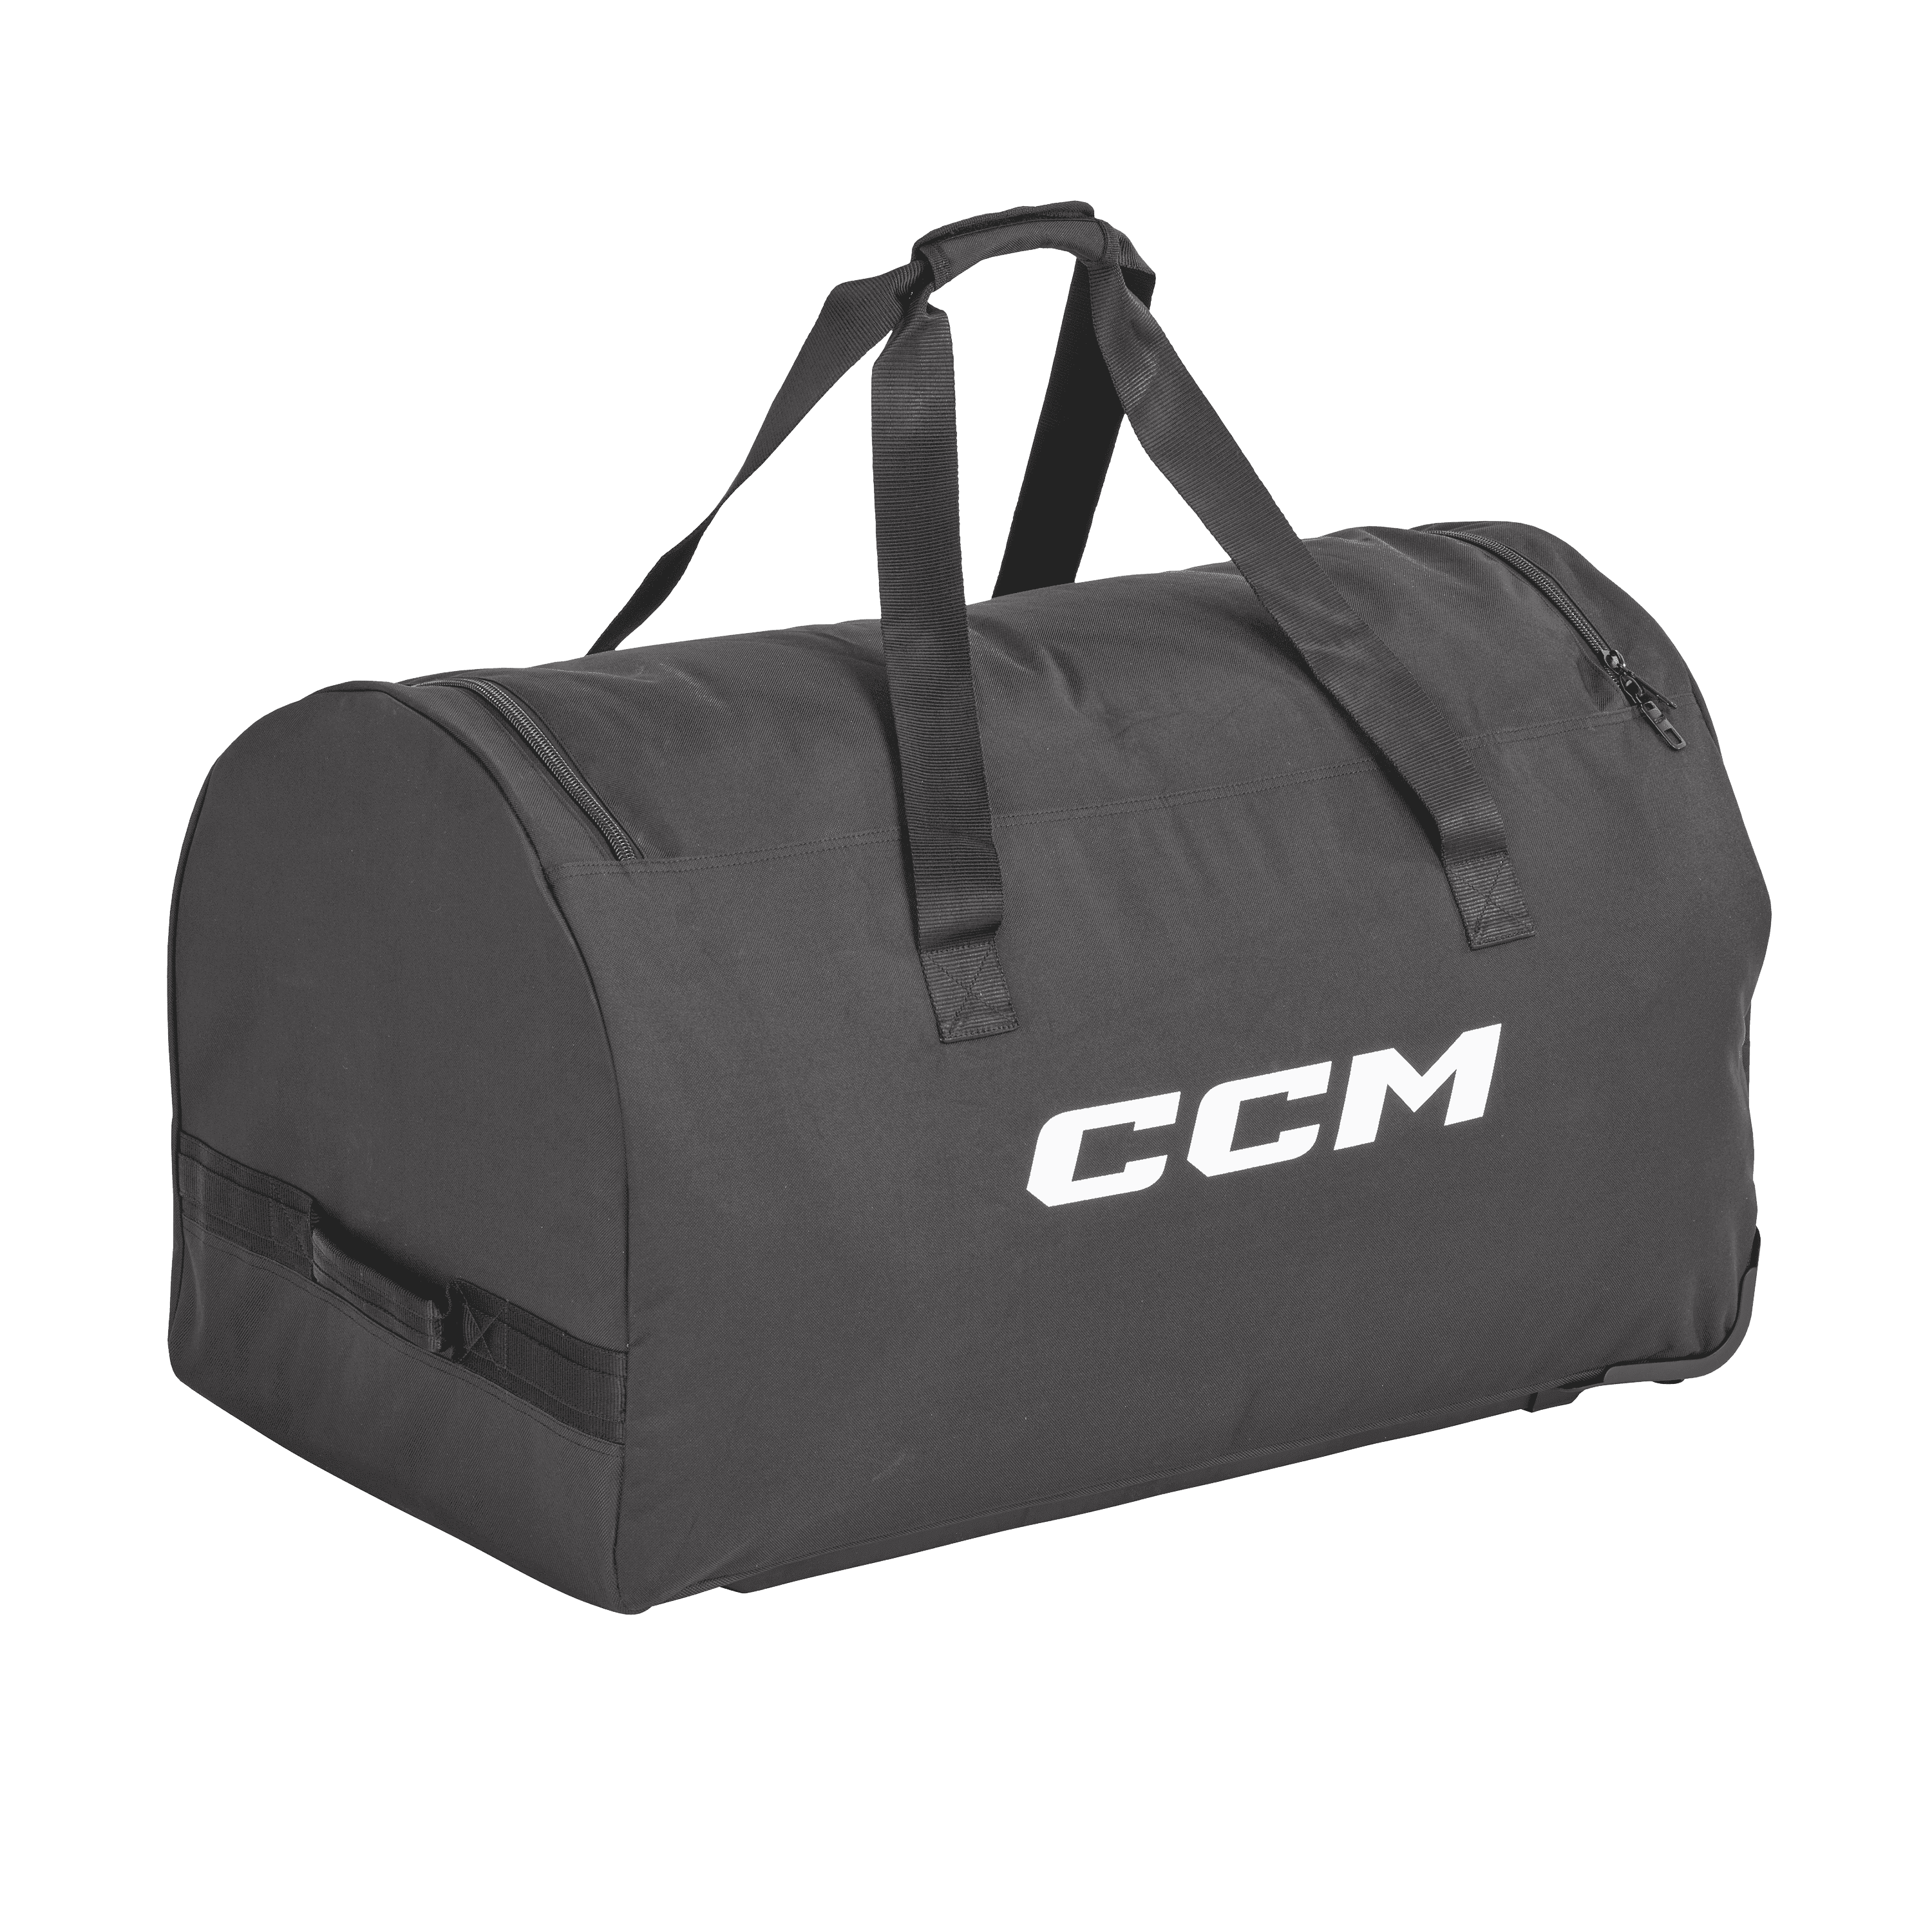 Tasche CCM 420 Player Basic Wheeled Bag SR 36"L x 20"H x 20" W